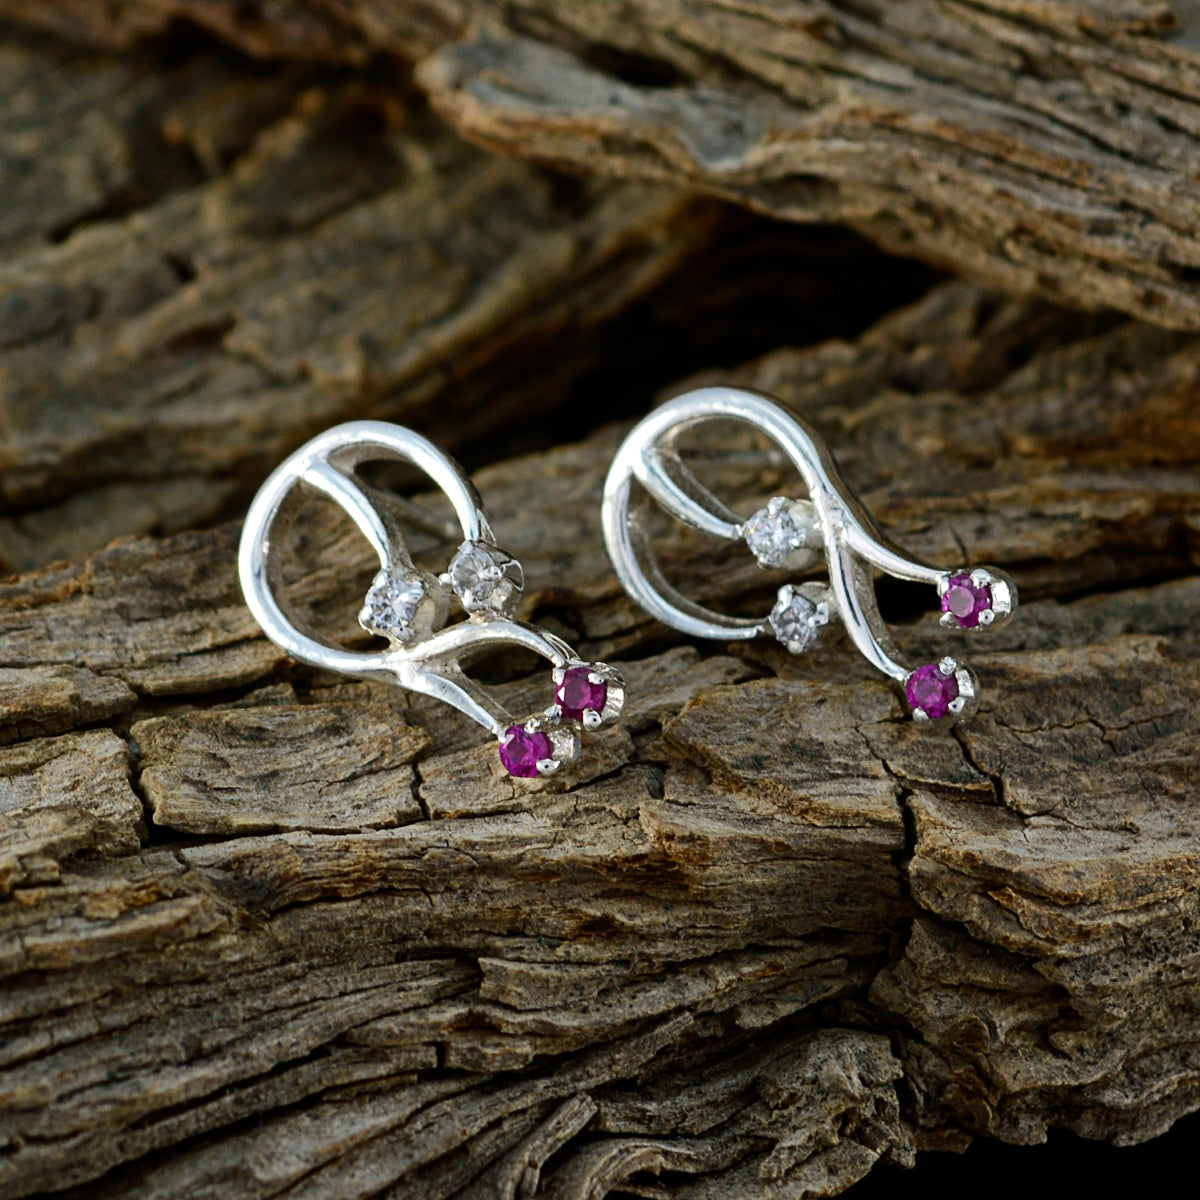 Riyo Good Gemstones round Faceted Multi Multi CZ Silver Earrings valentine's day gift